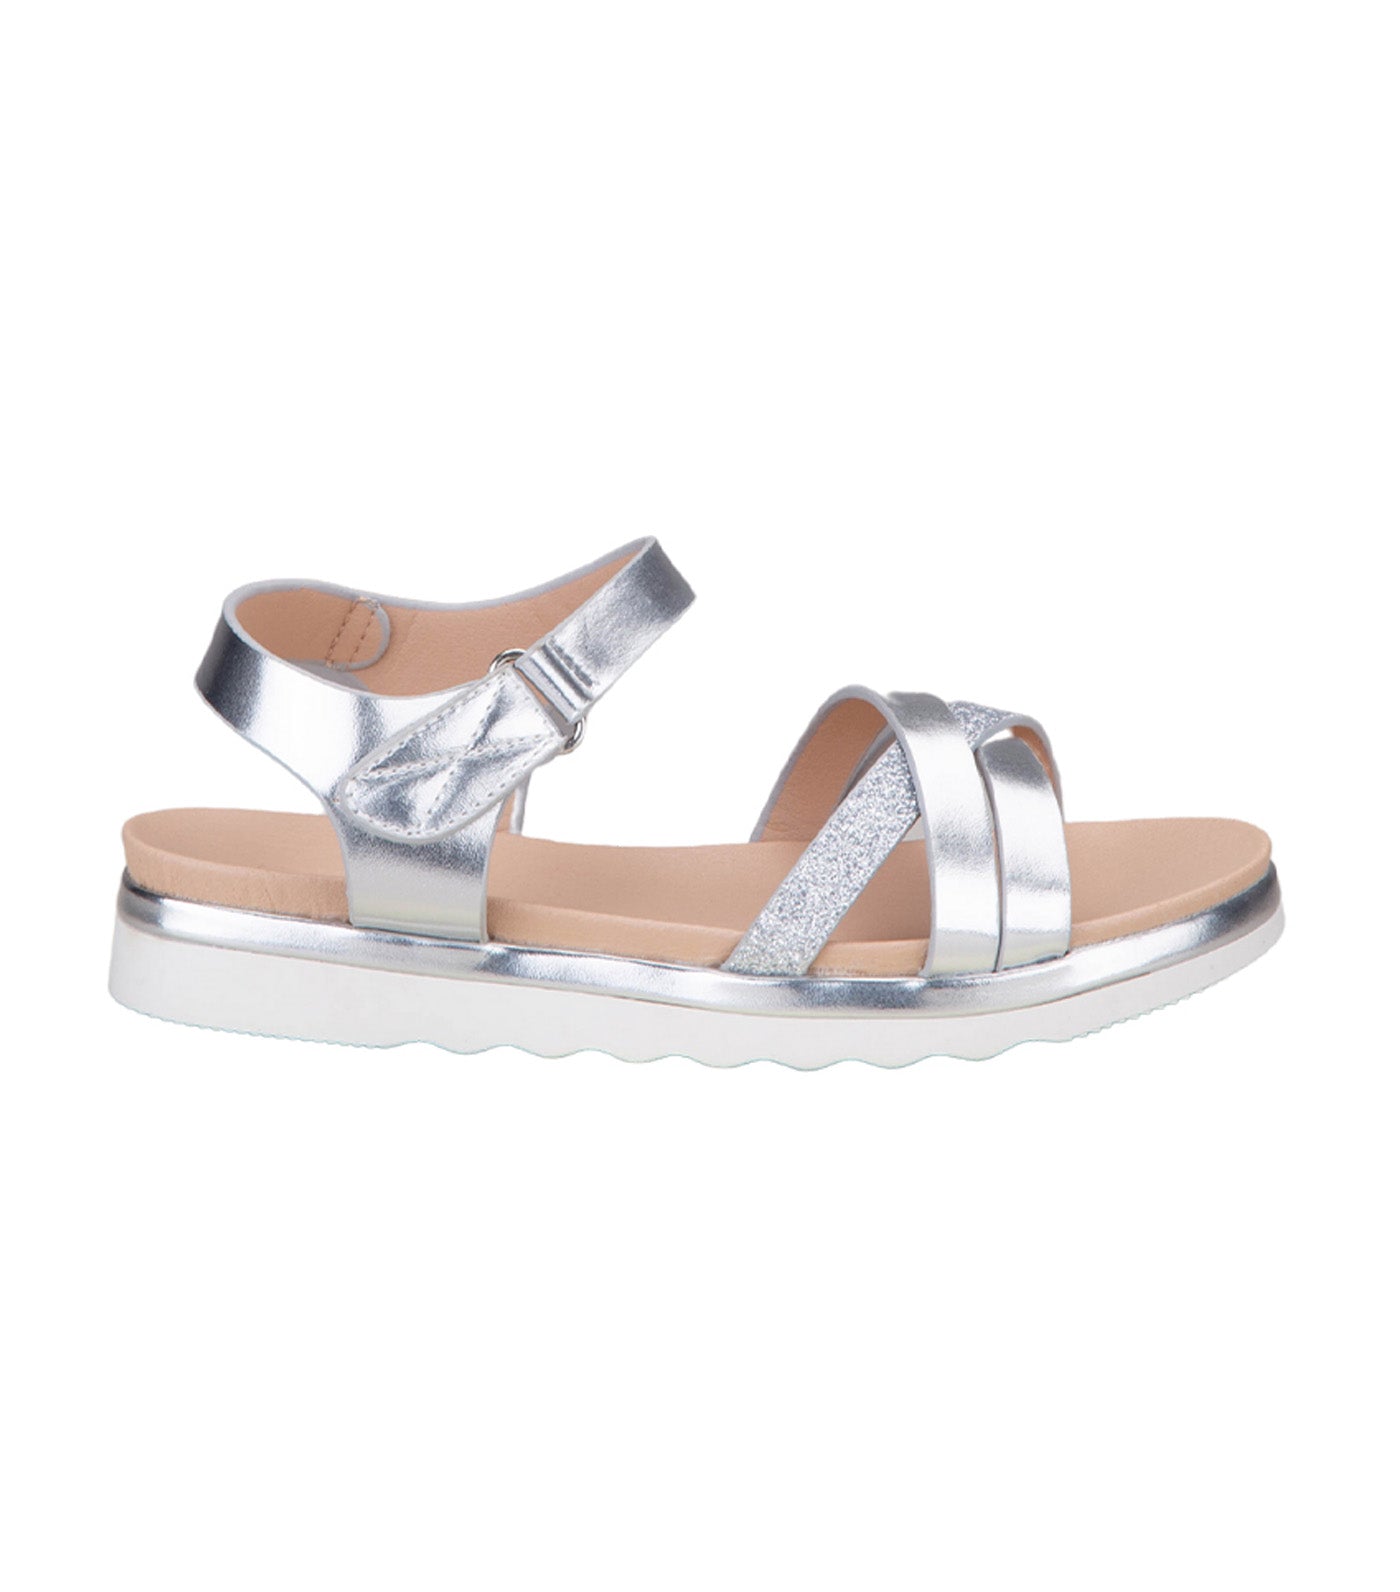 Bobbie Kids Sandals for Girls - Silver